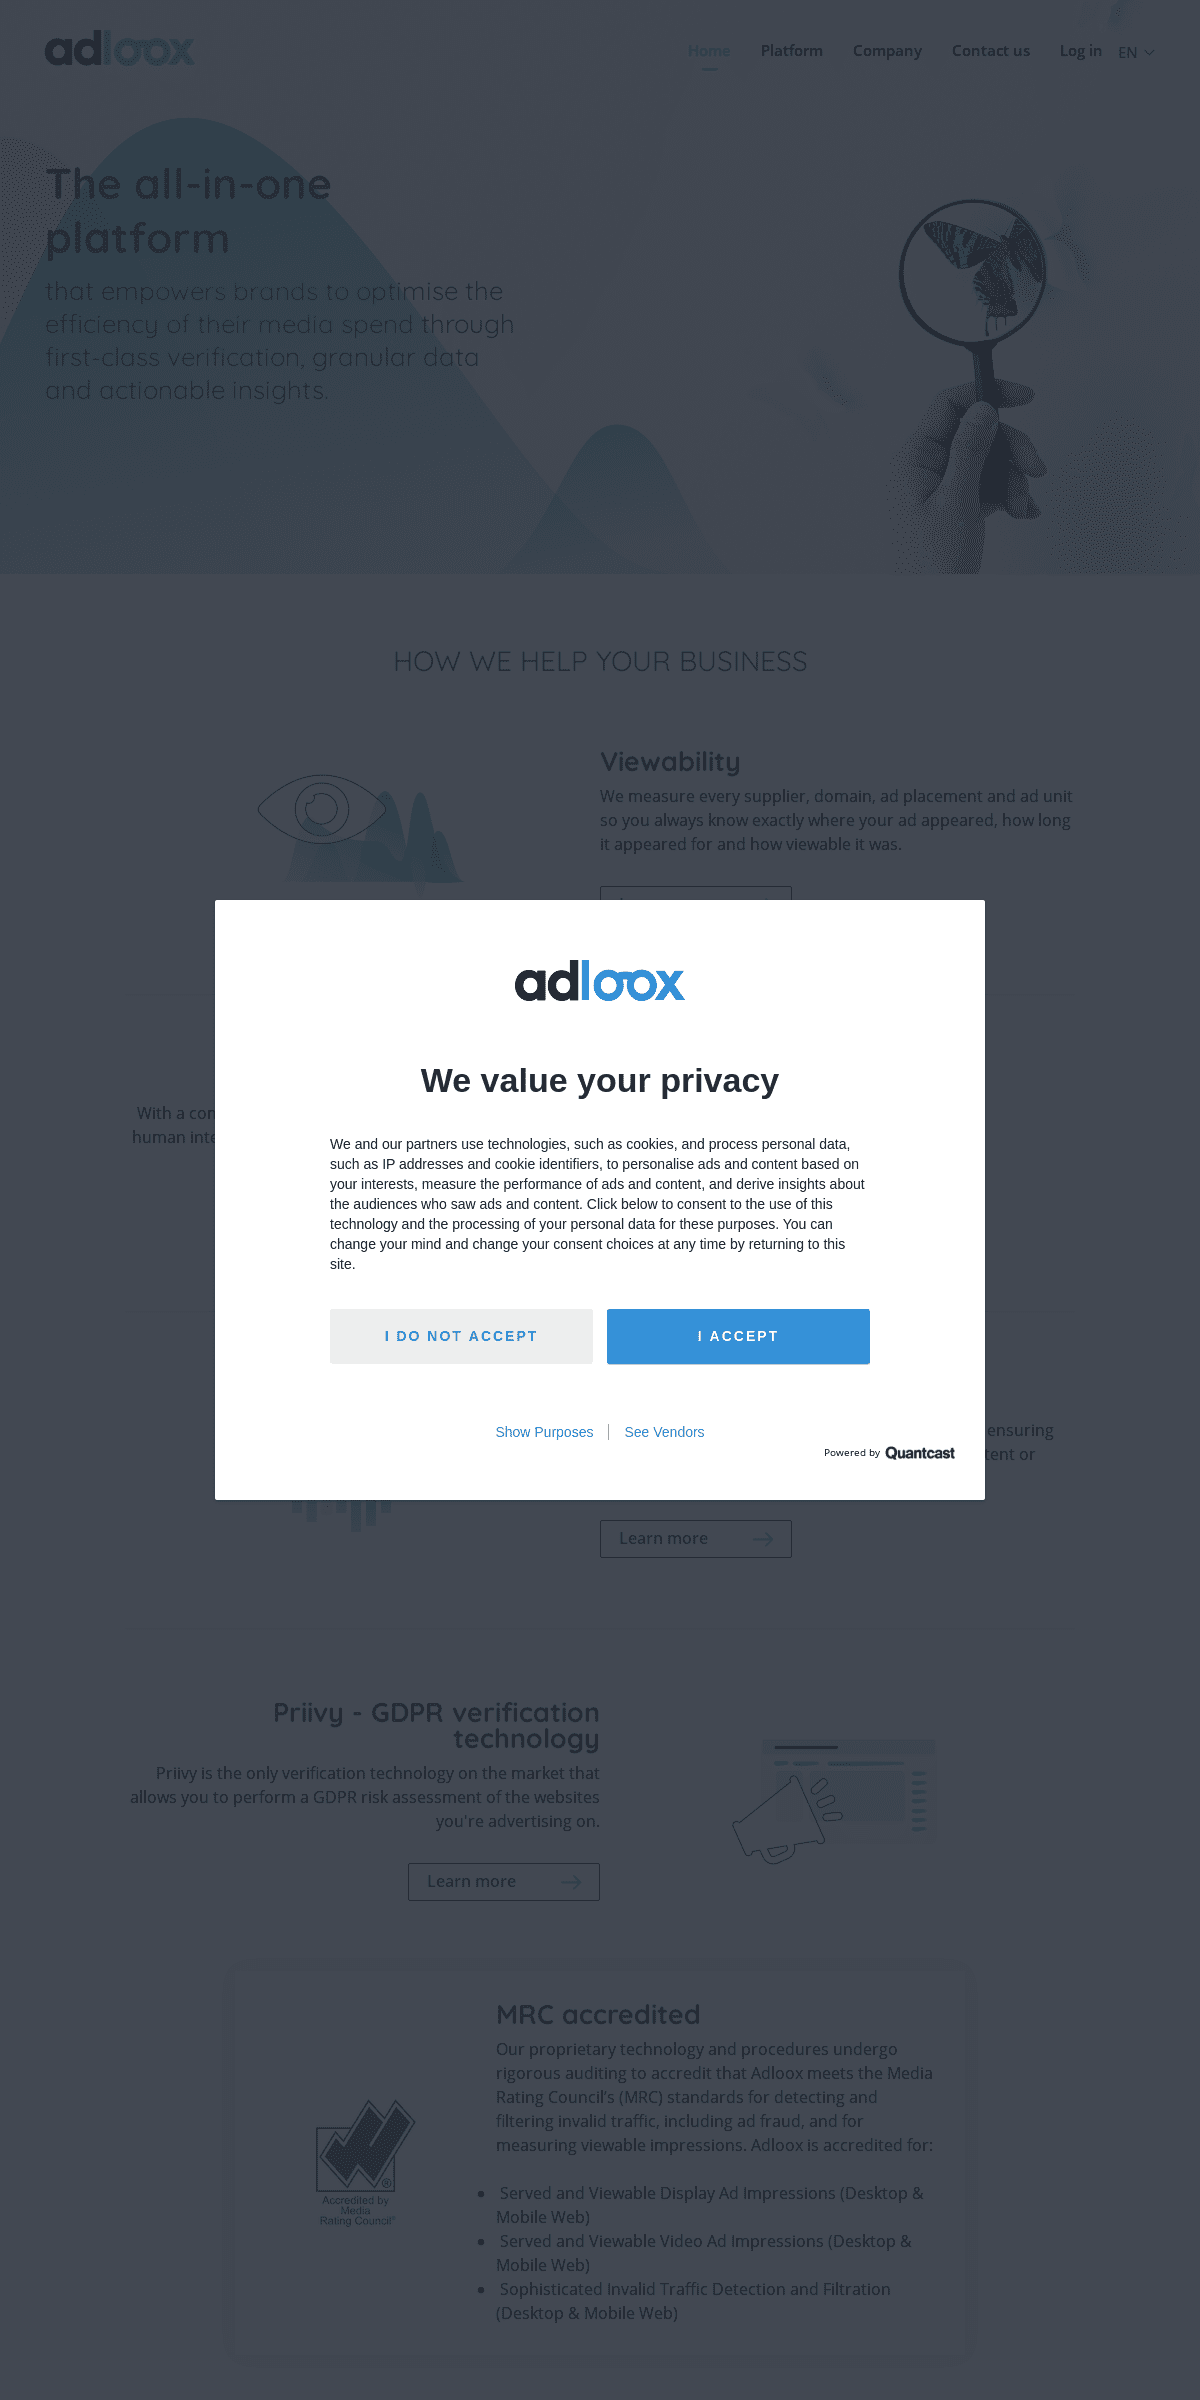 A complete backup of adloox.com